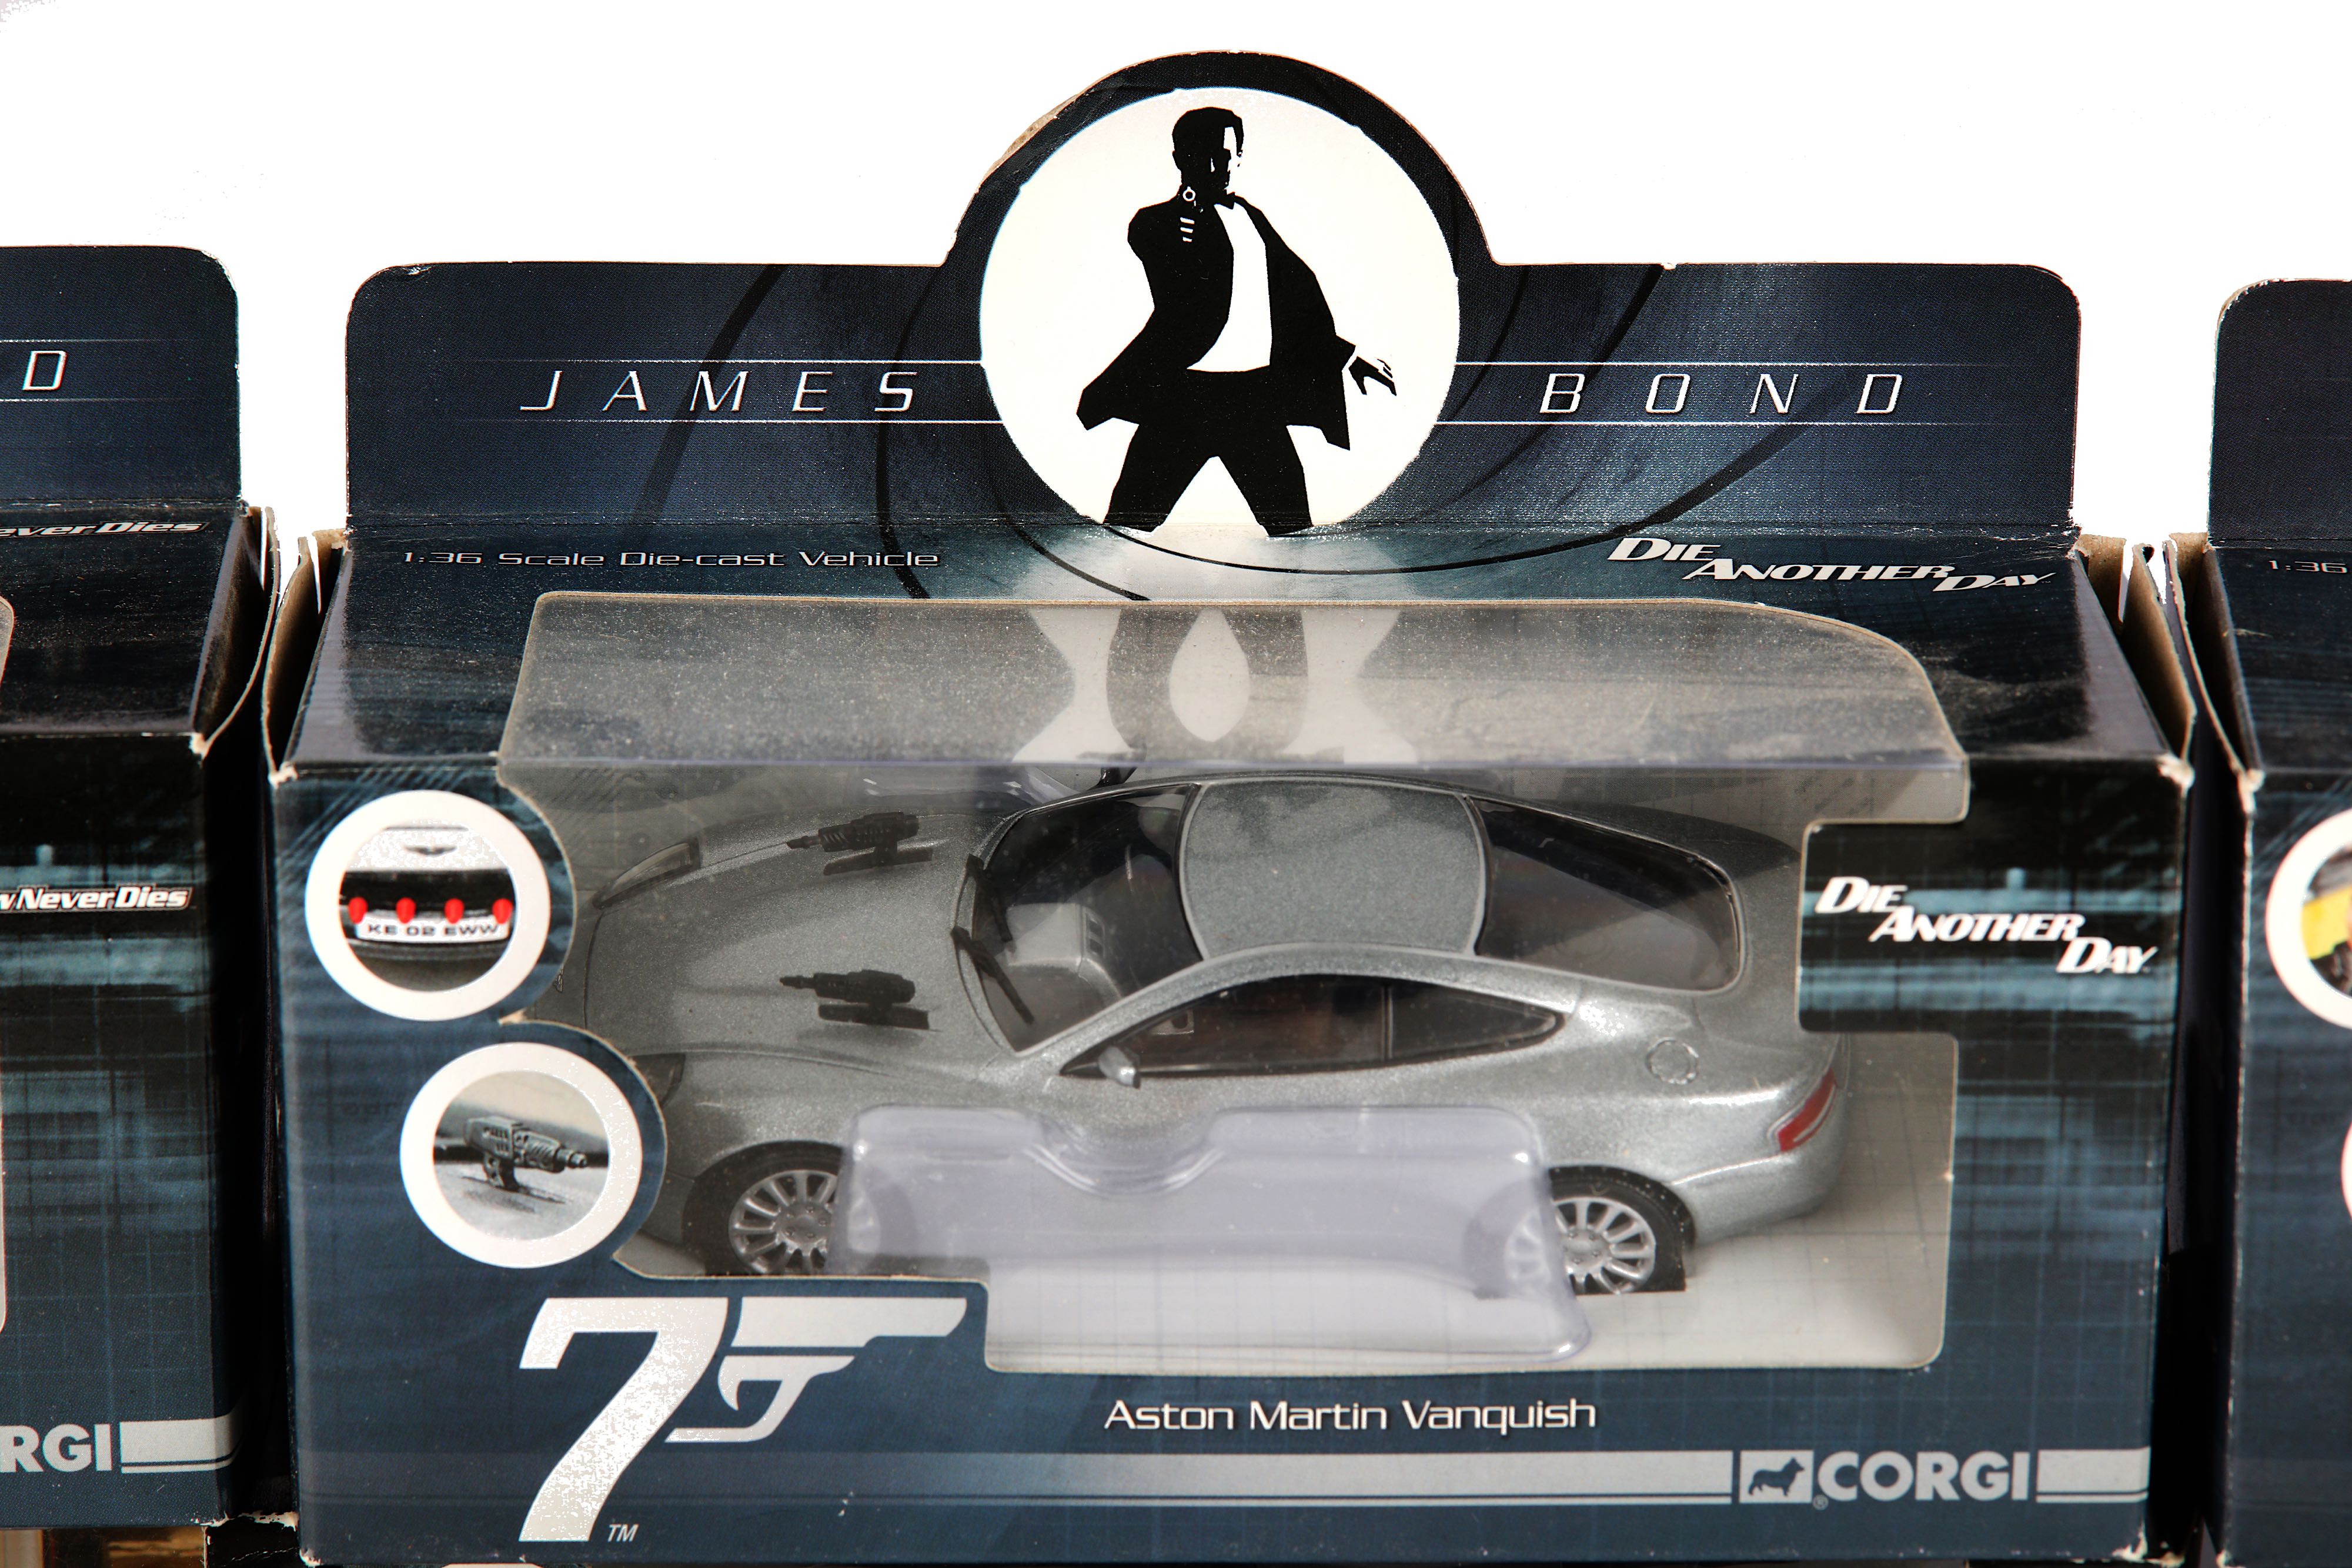 London, UK. 25th July, 2014. A miniature model of the 'James Bond